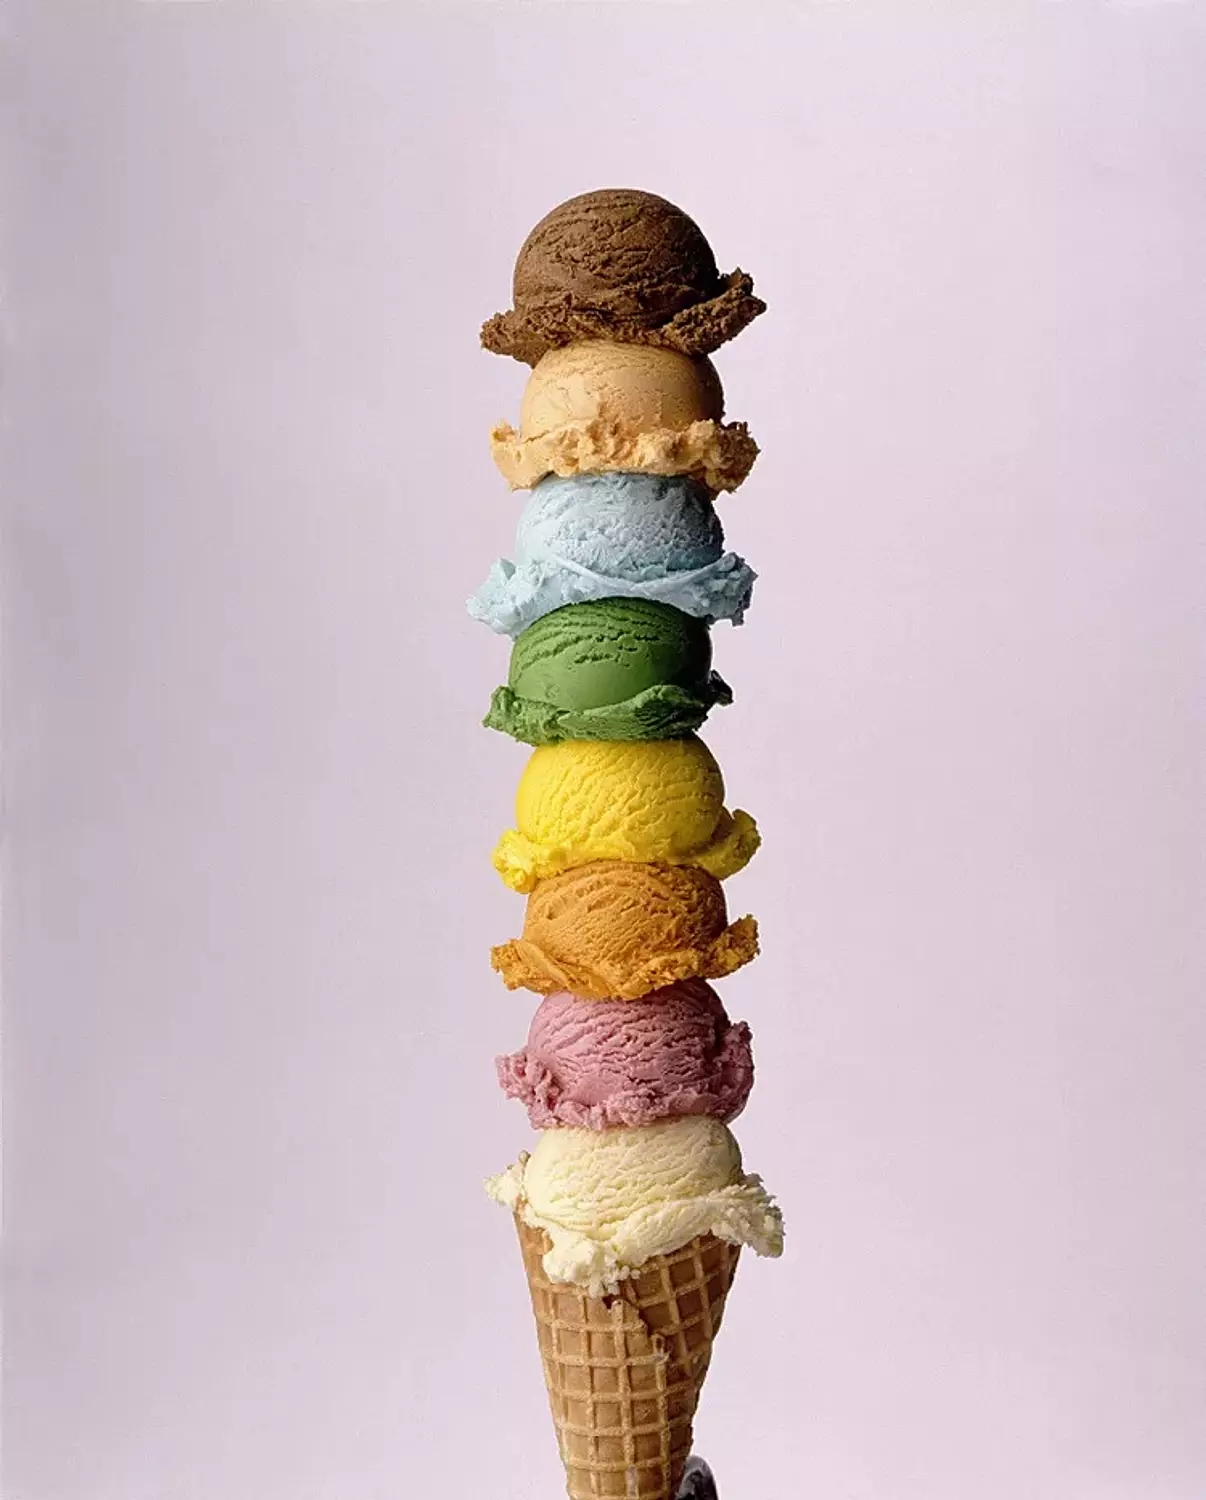 Ice Cream - One Scoop hover image